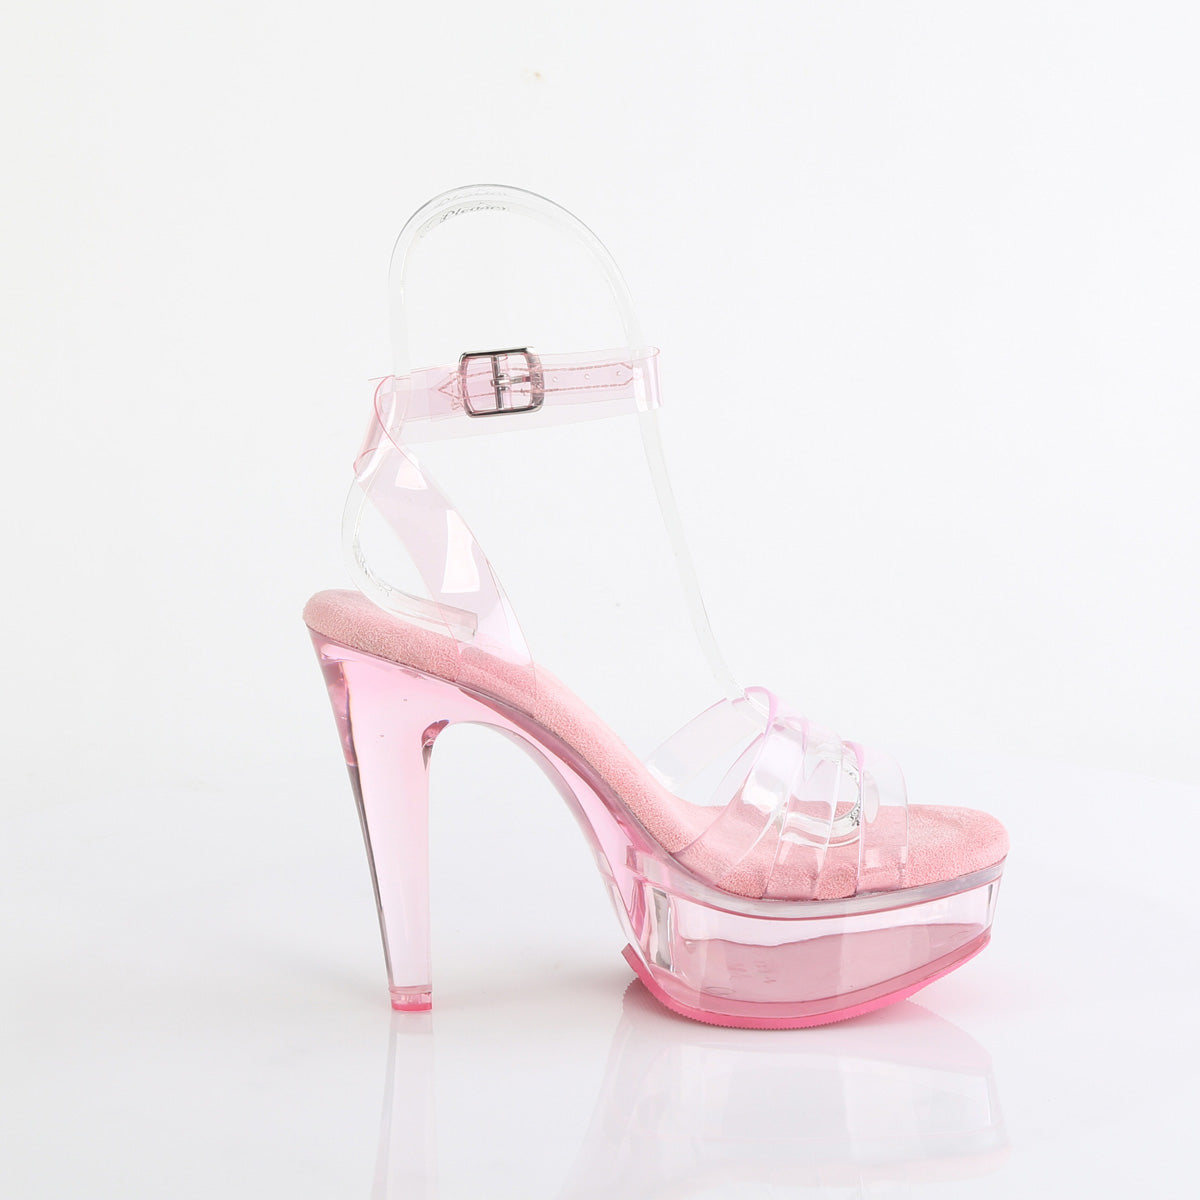 5 Inch Heel MARTINI-505 Baby Pink